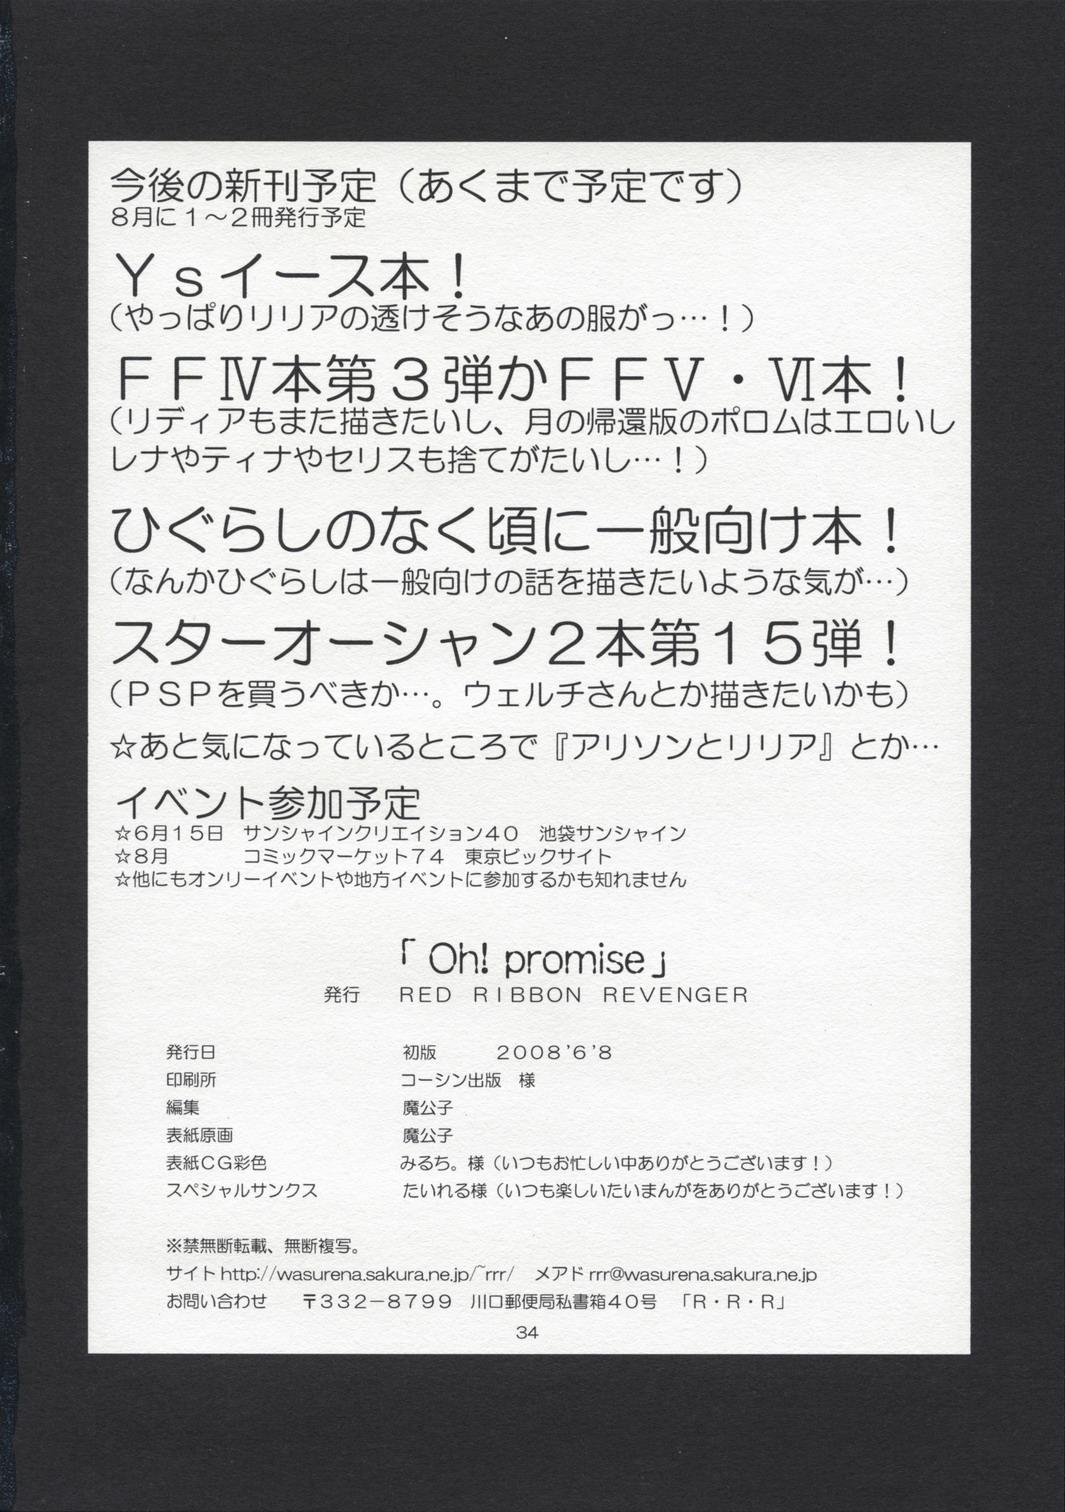 (ComiComi12) [RED RIBBON REVENGER (Makoushi, Taireru) Oh! promise (The Tower of Druaga) 32